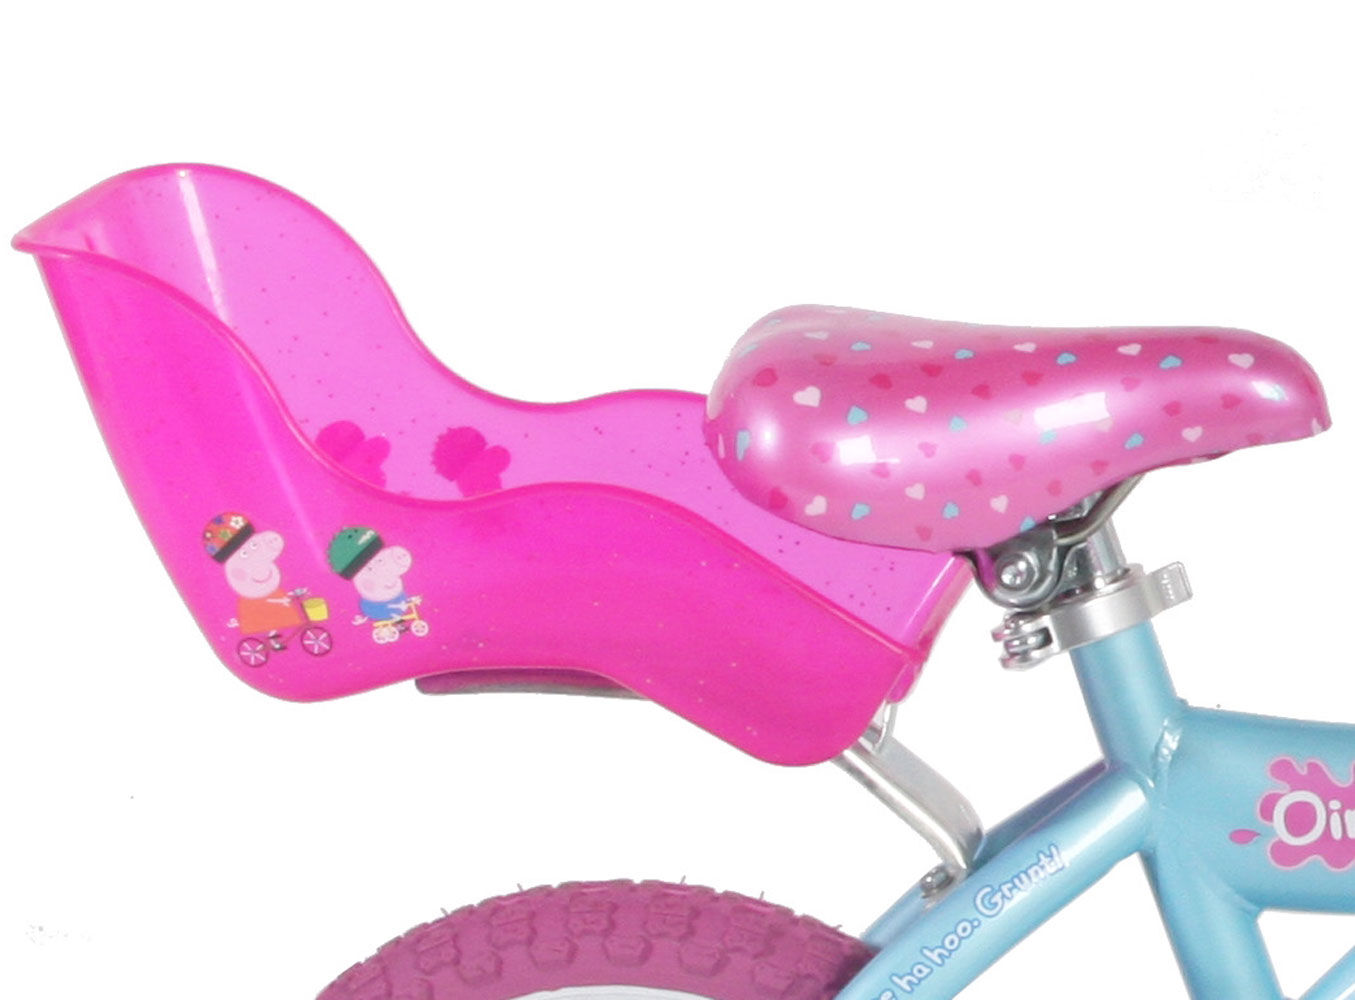 peppa pig bike with doll seat